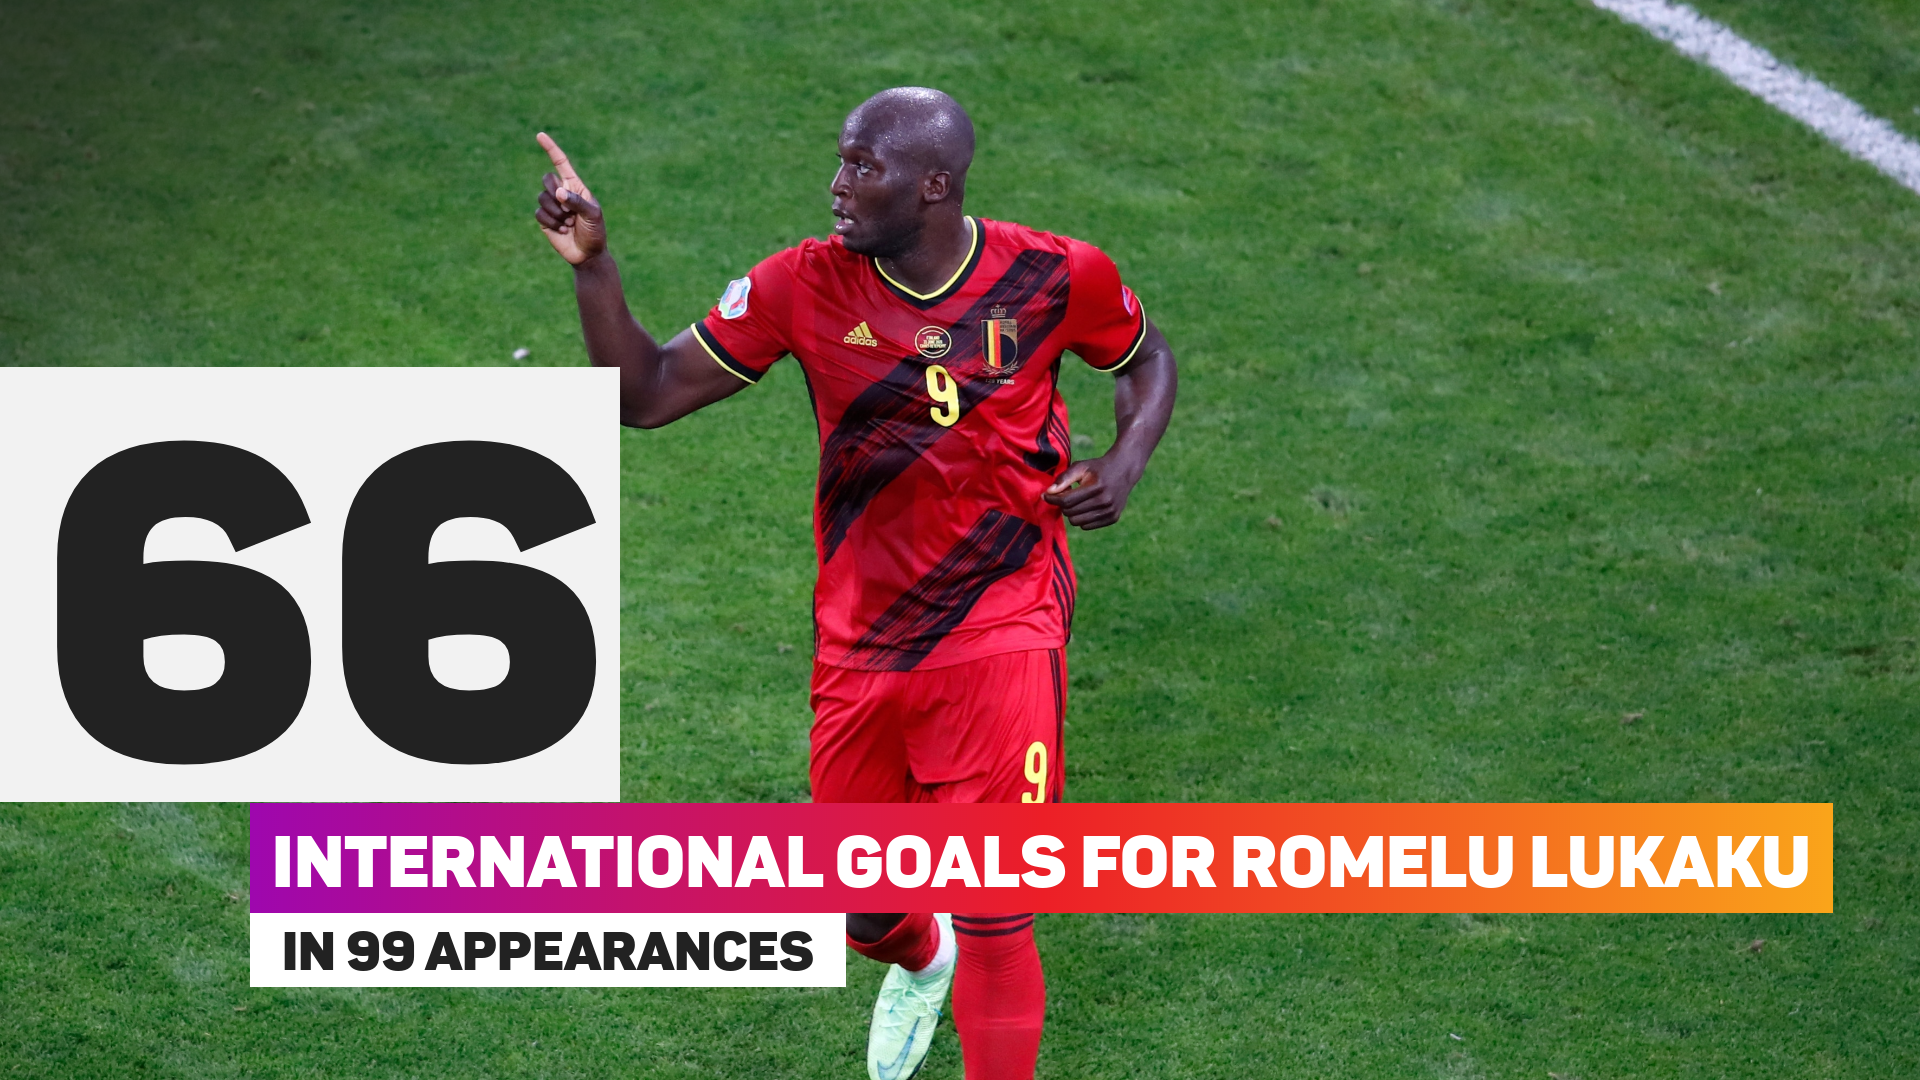 Romelu Lukaku has 66 goals in 99 appearances for Belgium